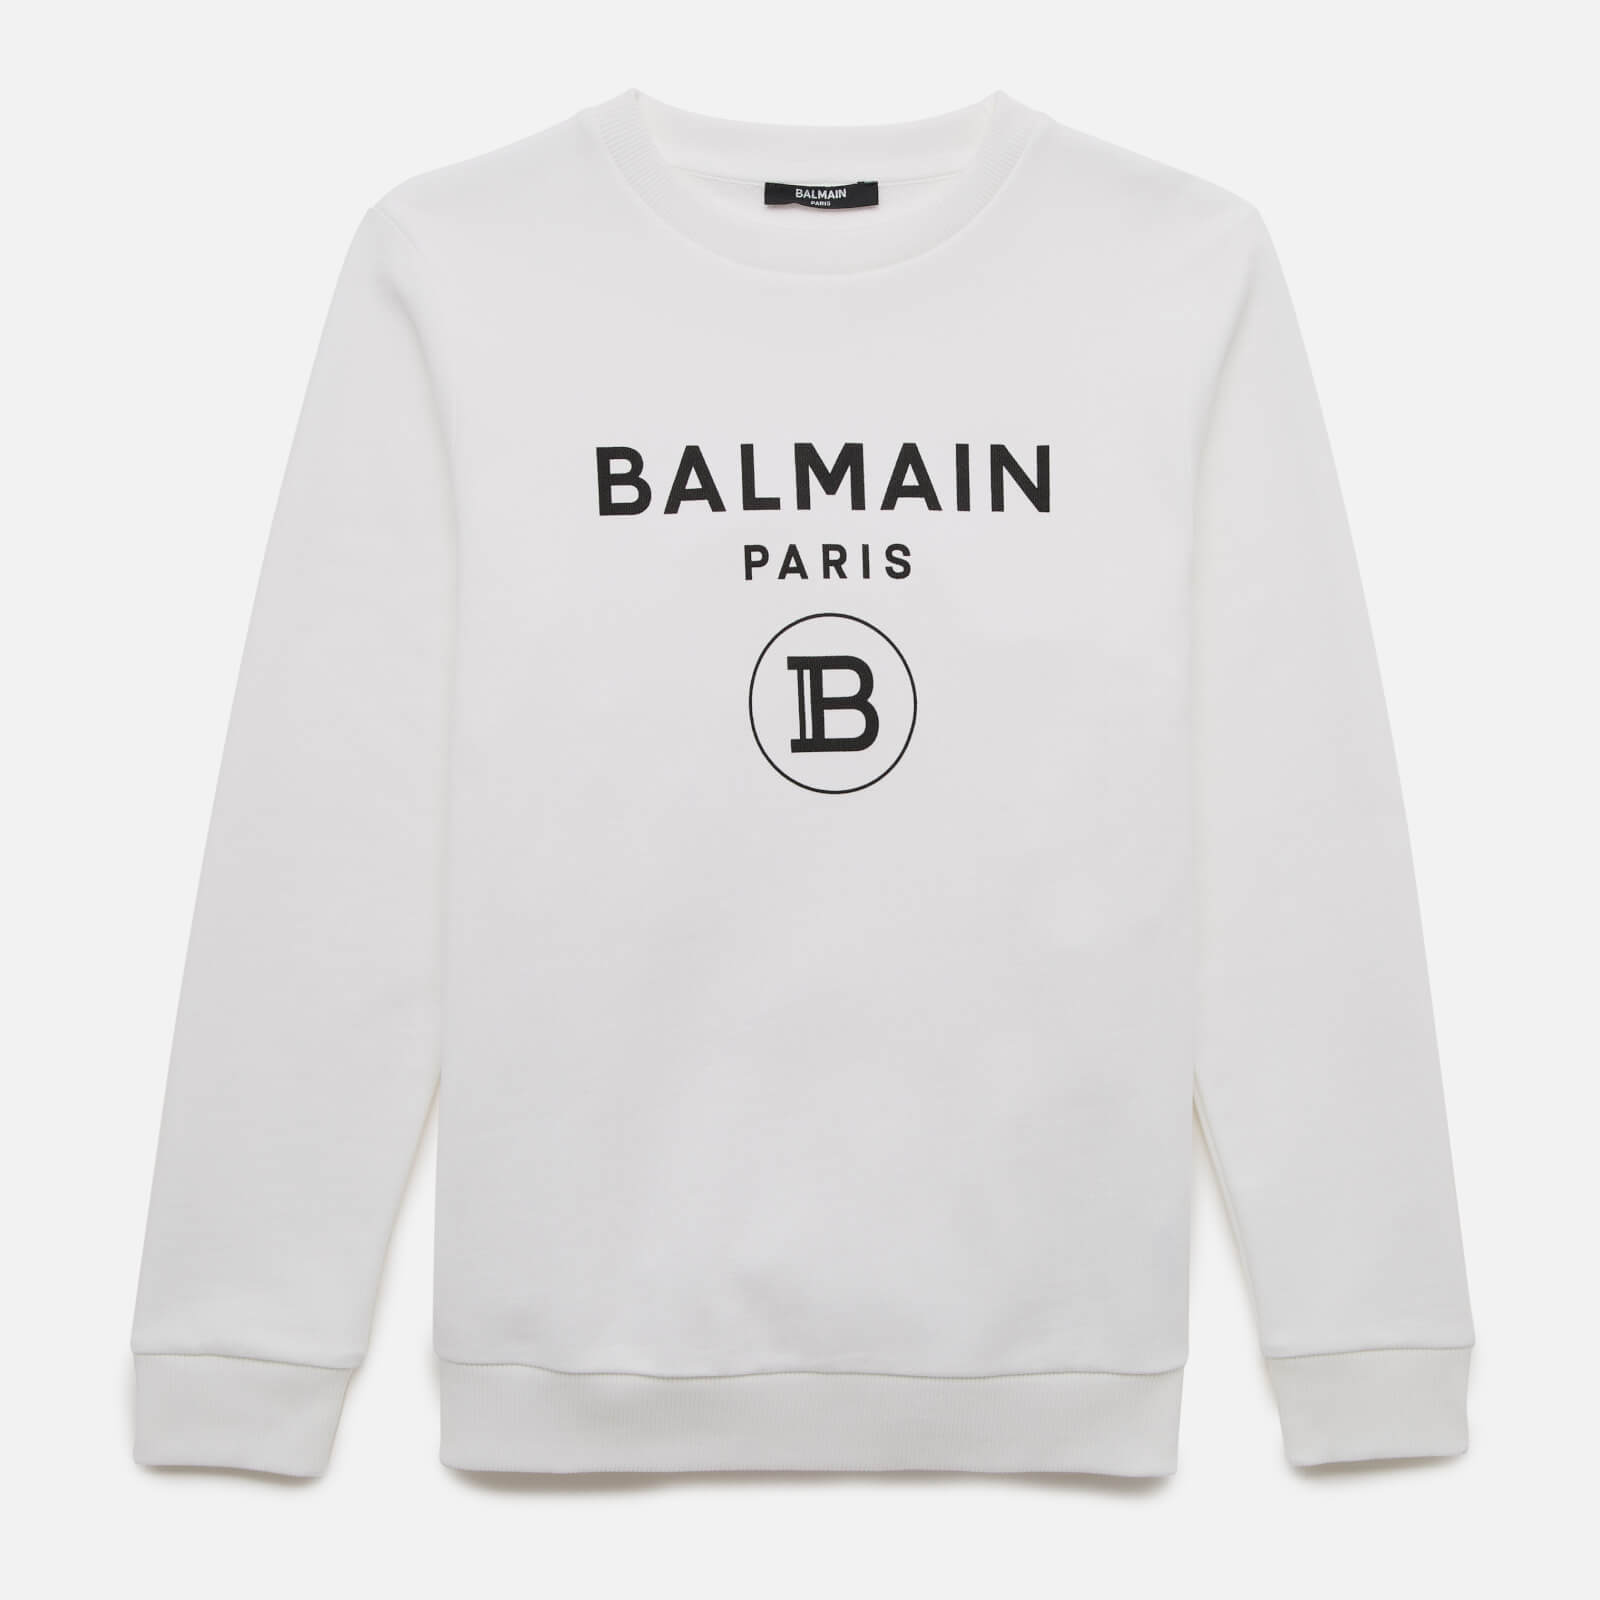 Balmain Boys' Logo Sweatshirt - Bianco - 10 Years